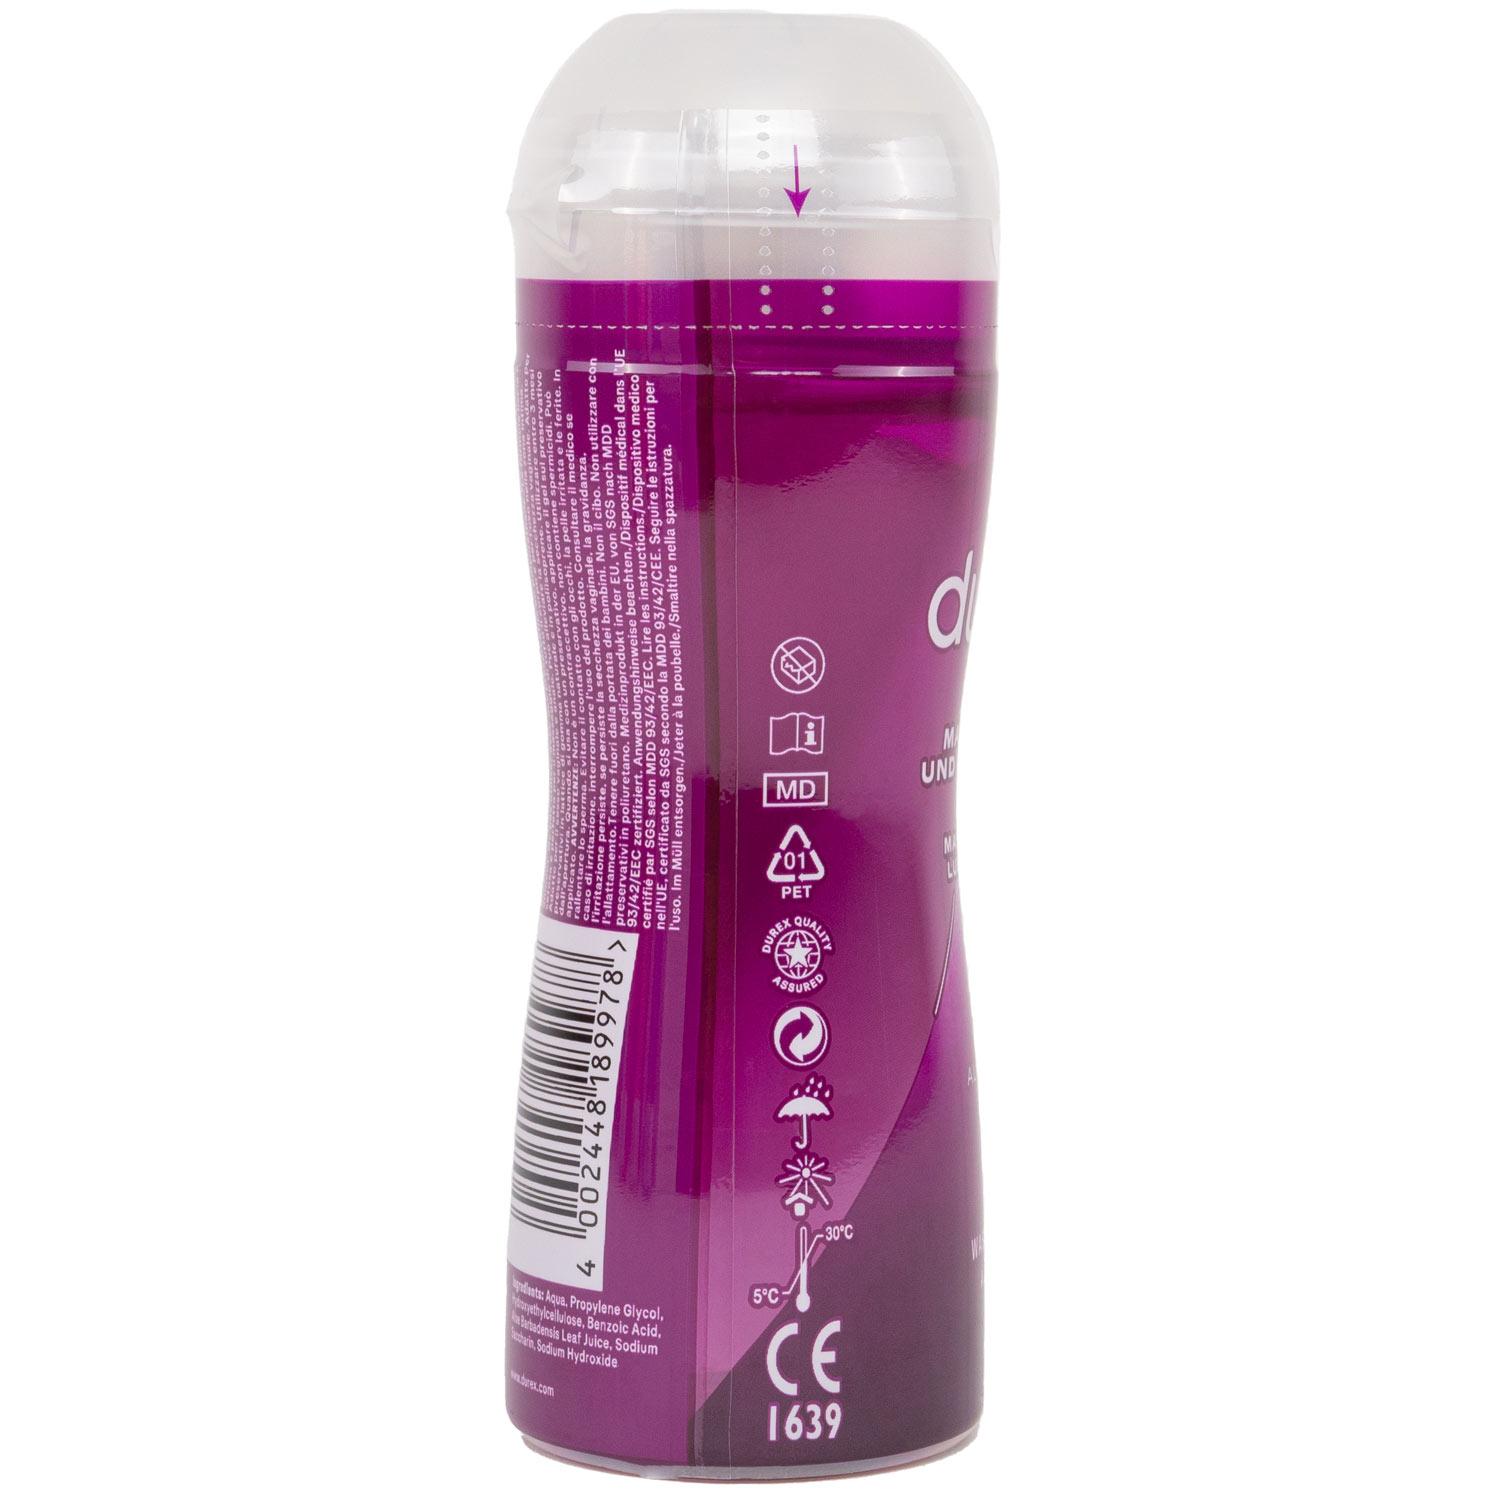 Durex 2 in 1, Massage & Lubricant with Aloe Vera, Water Based, 200 ml